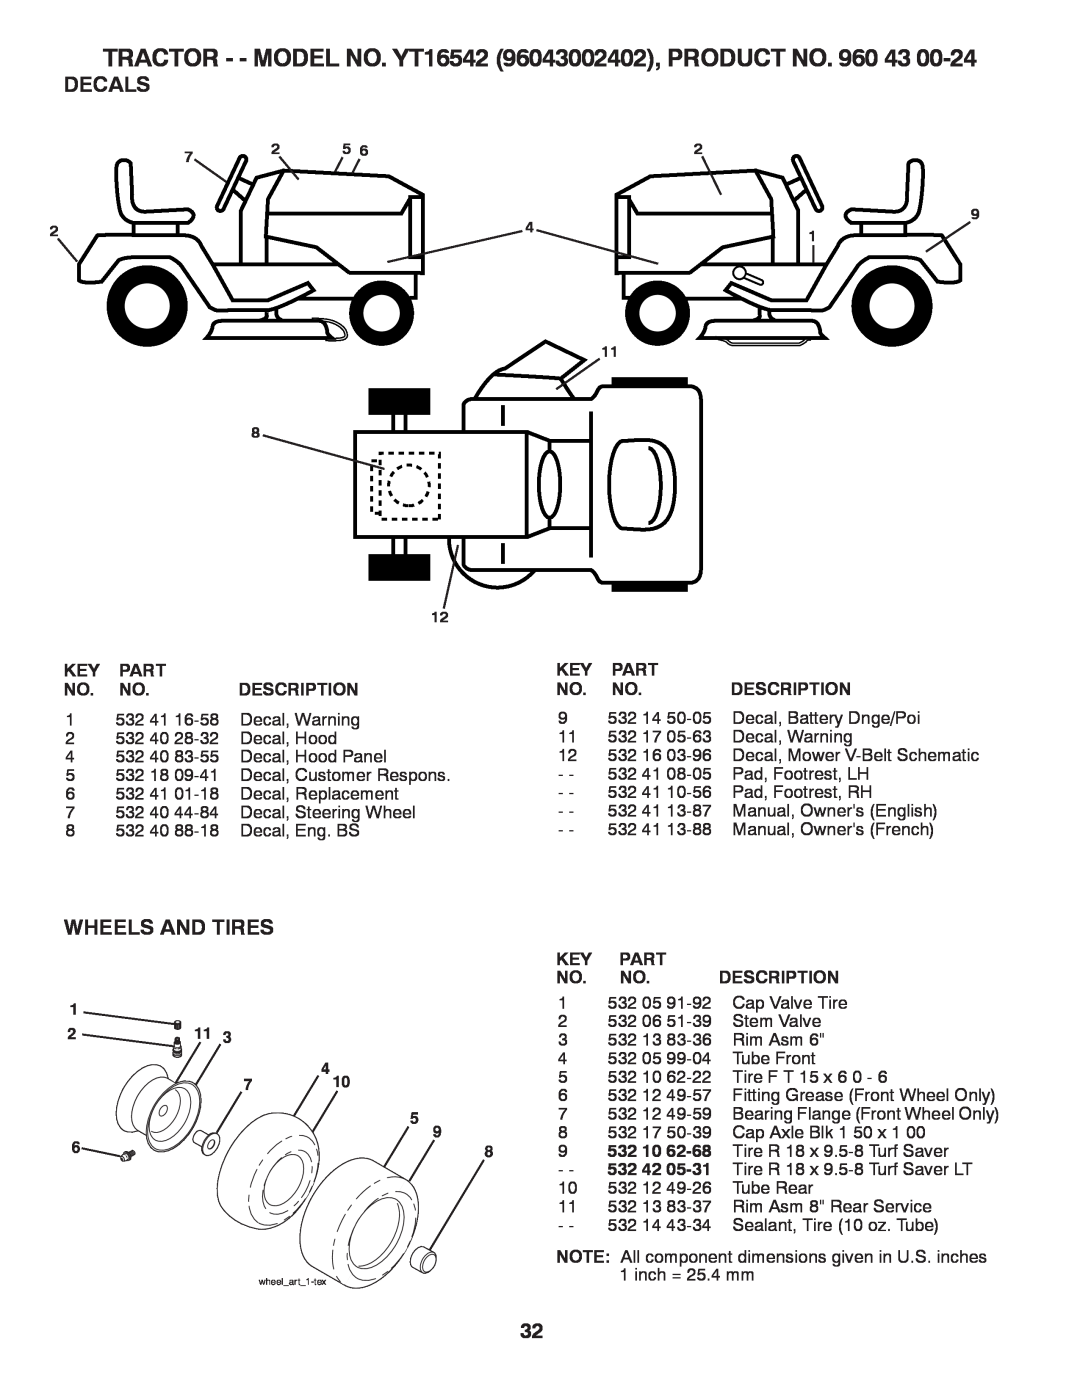 Husqvarna owner manual Decals, Wheels And Tires, TRACTOR - - MODEL NO. YT16542 96043002402, PRODUCT NO, wheelart1-tex 